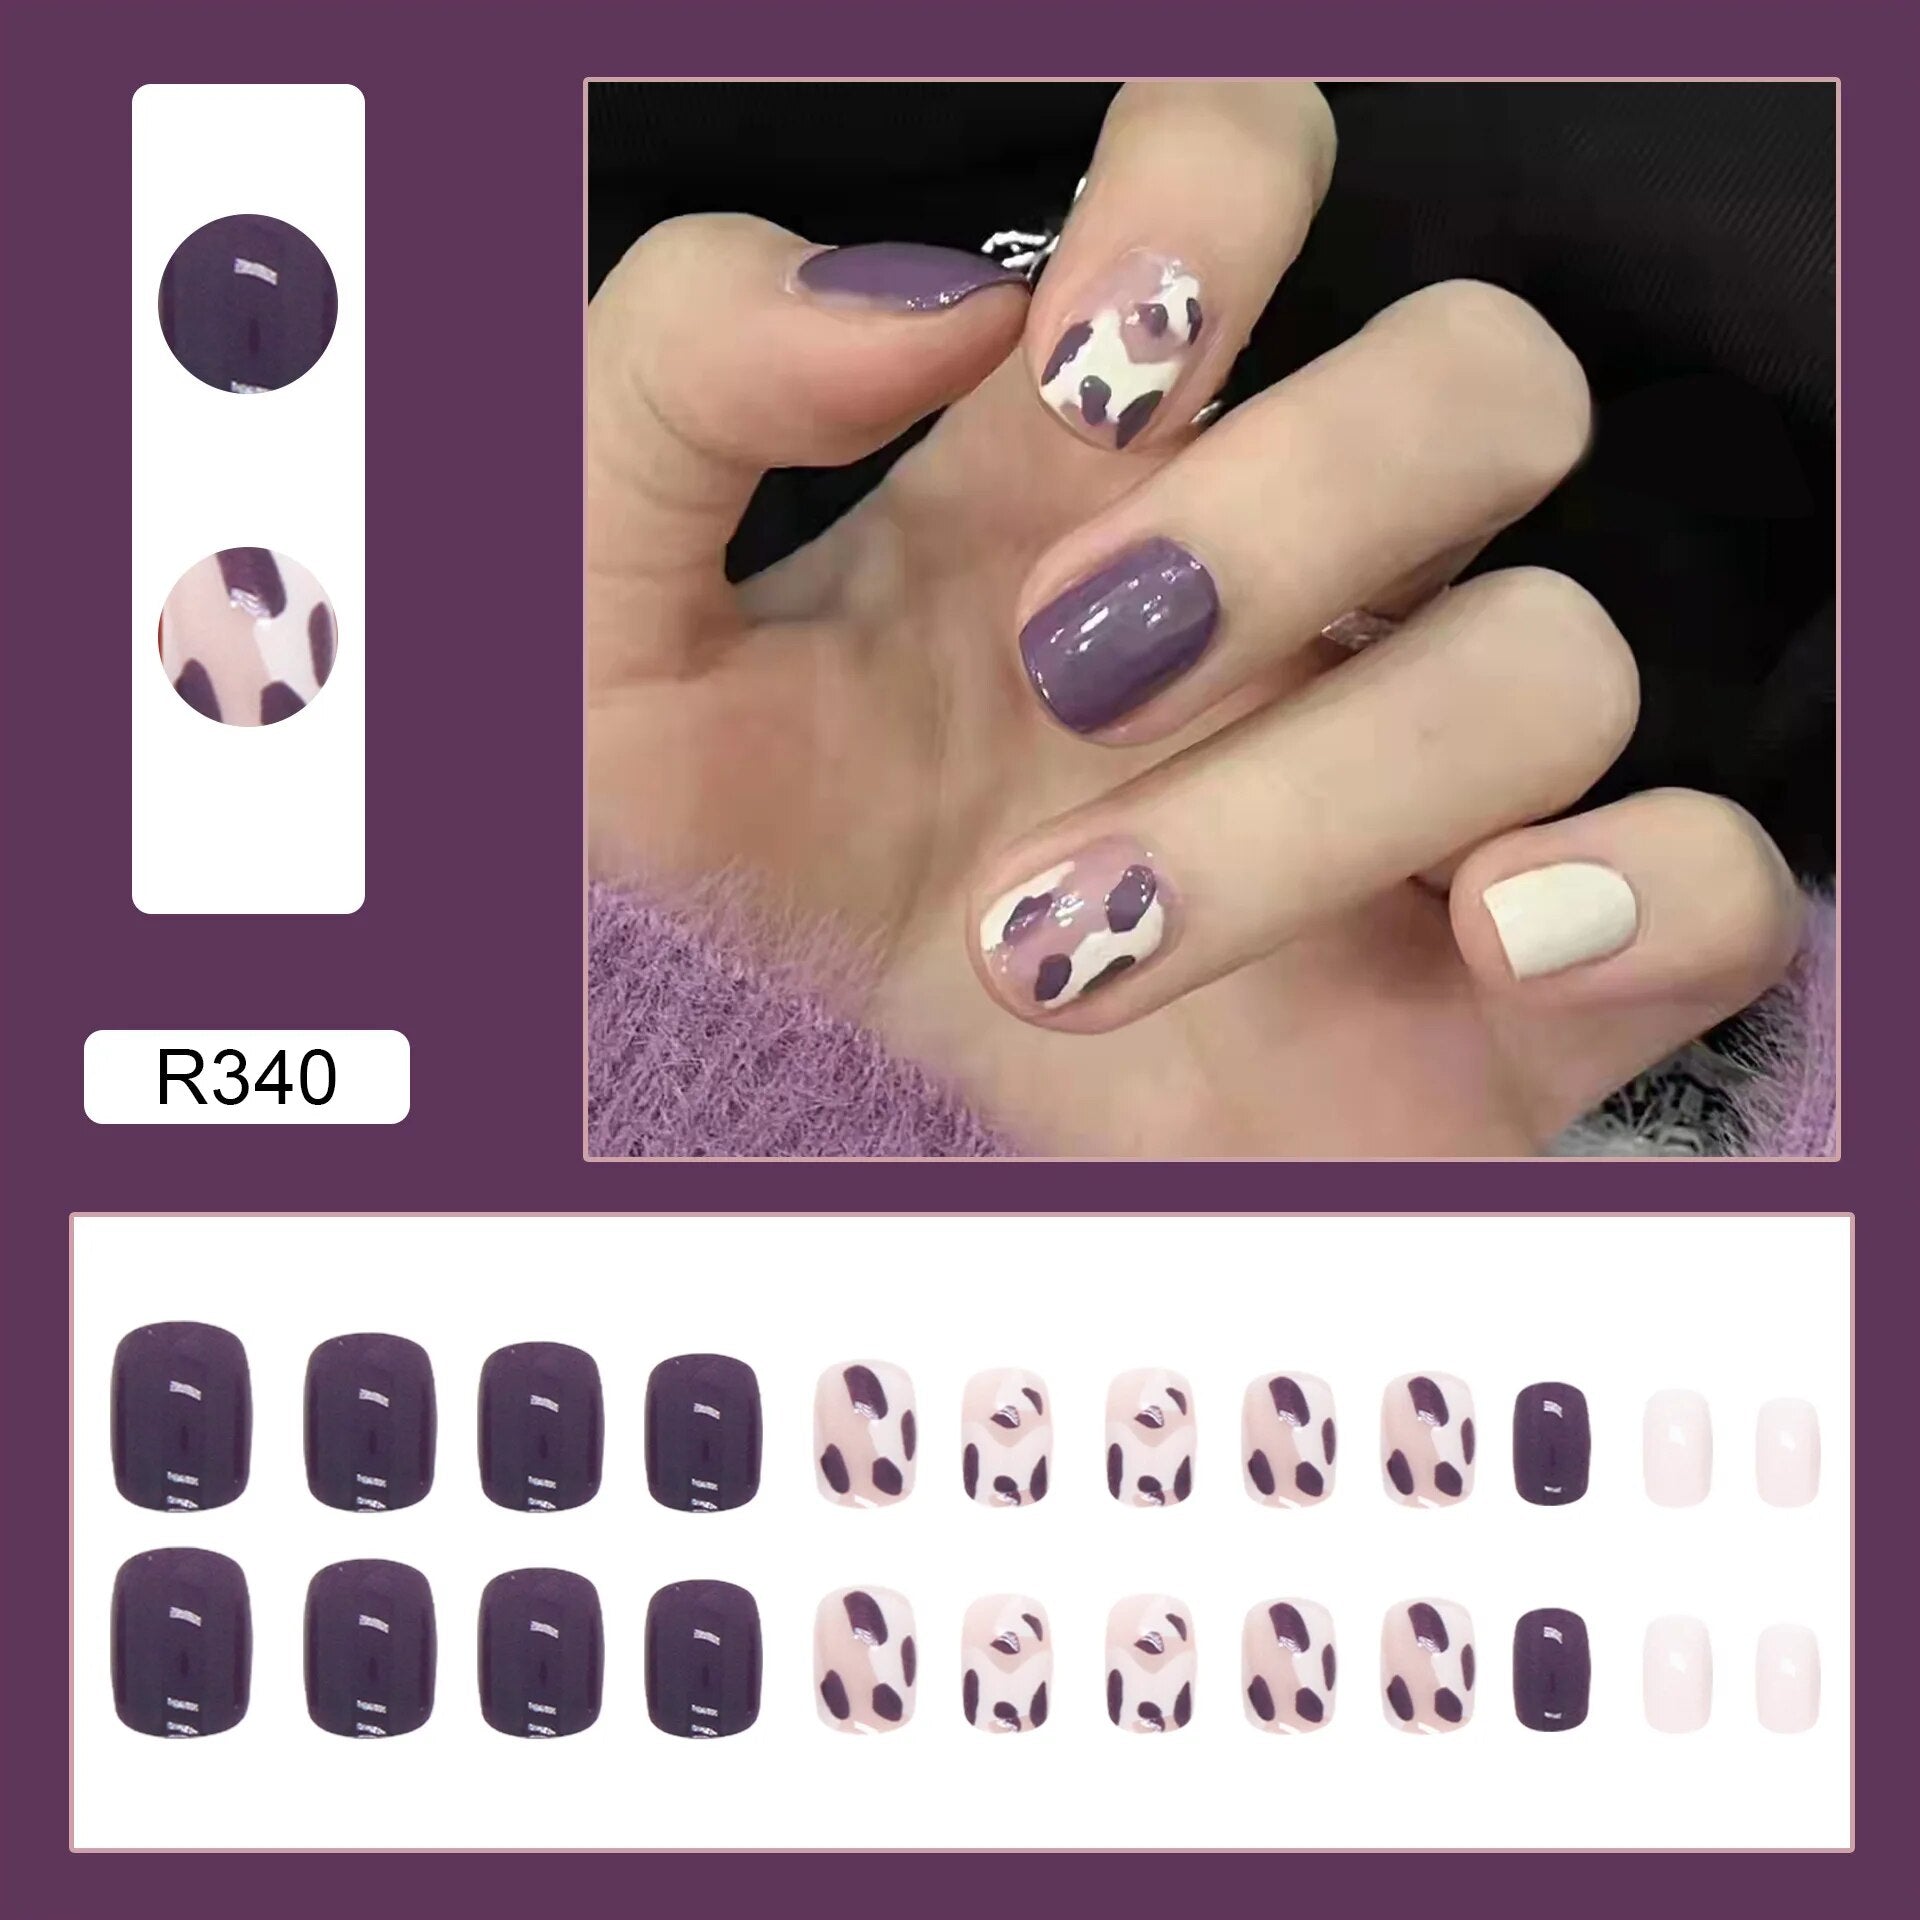 Aovica- 24pcs/pack Fake Nails Art Nail Tips Press on False Nails Set Full Cover Purple Cow Artificial Short Square Head Fingernail